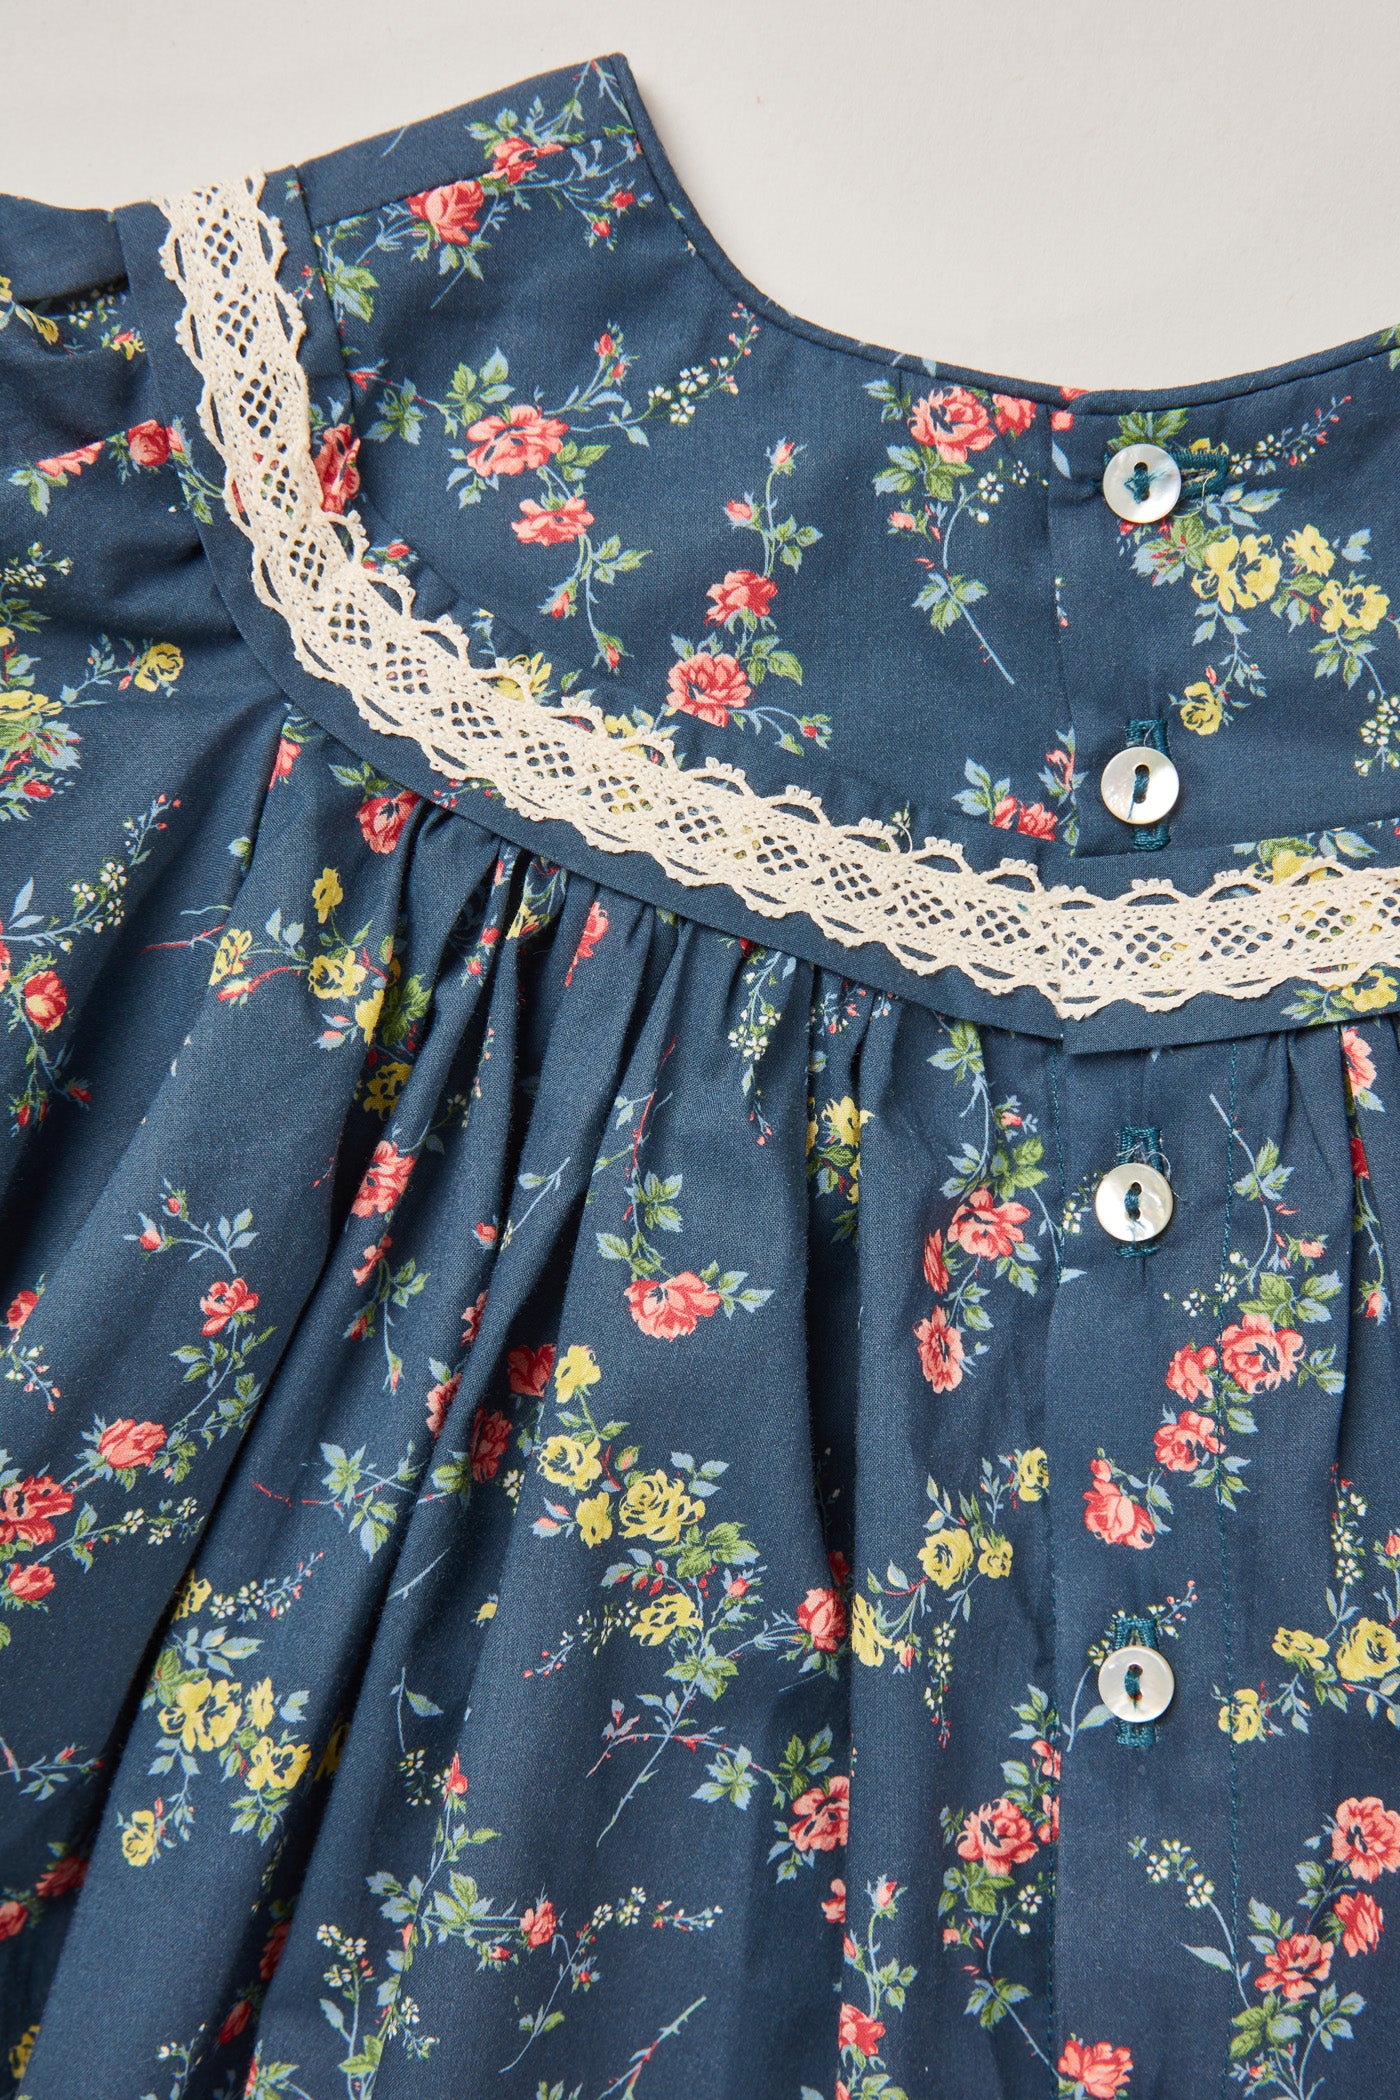 Plumcake Dress in Blue Rose Garden